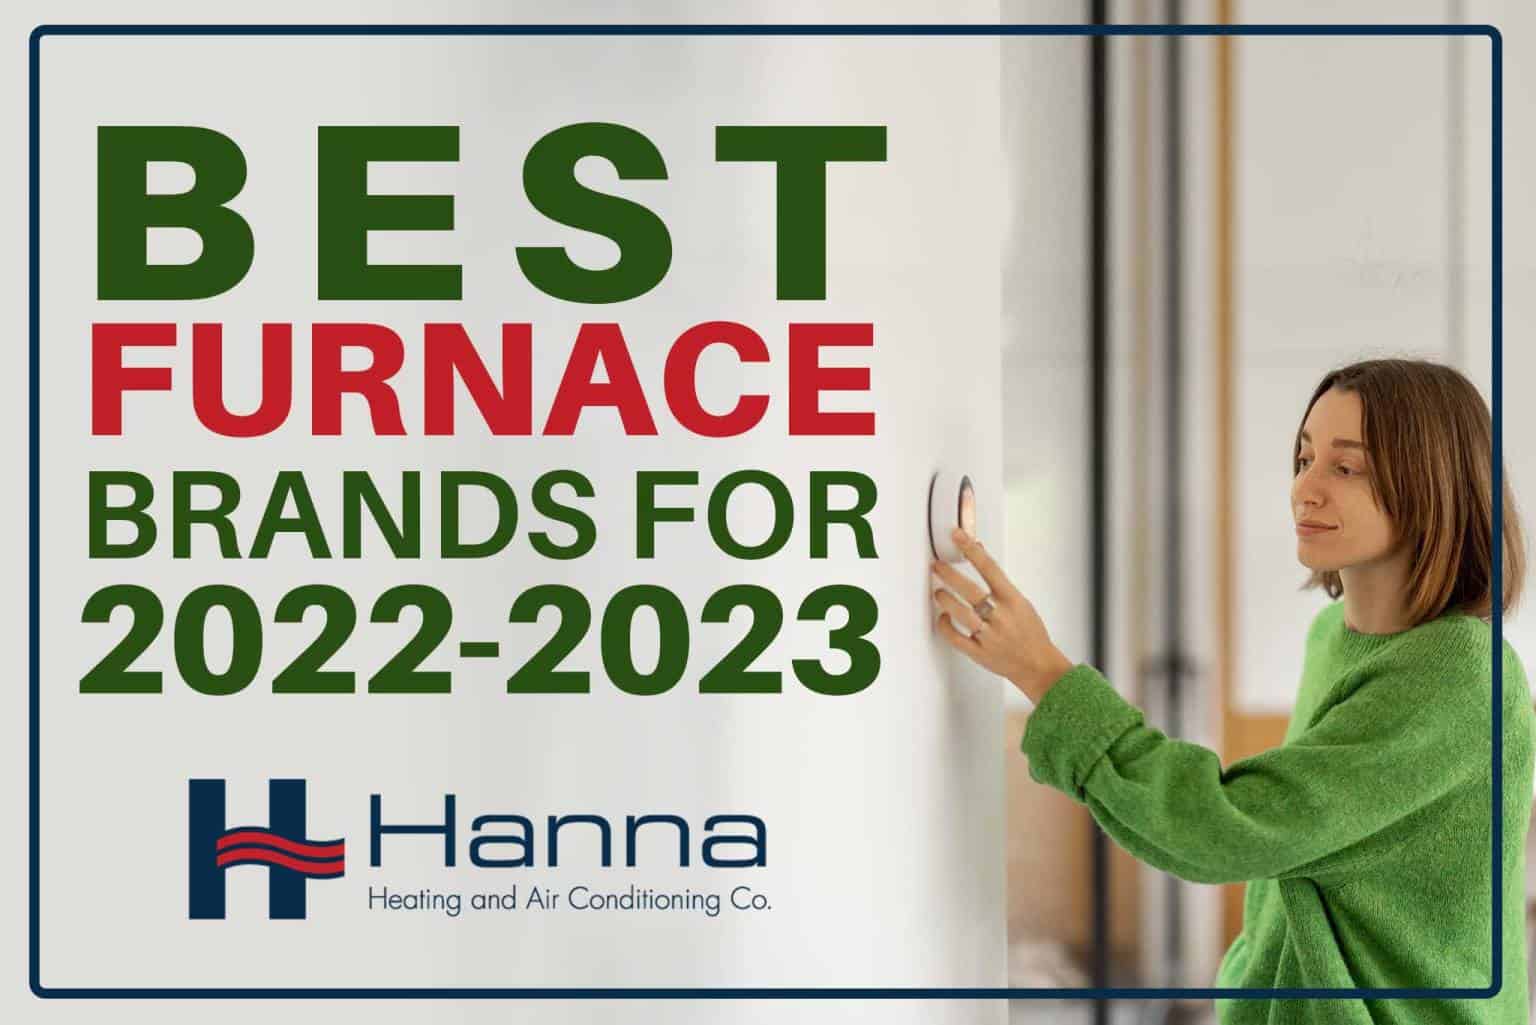 Best Furnace Brands 2022 2023 Wichita Hanna Heating & Air